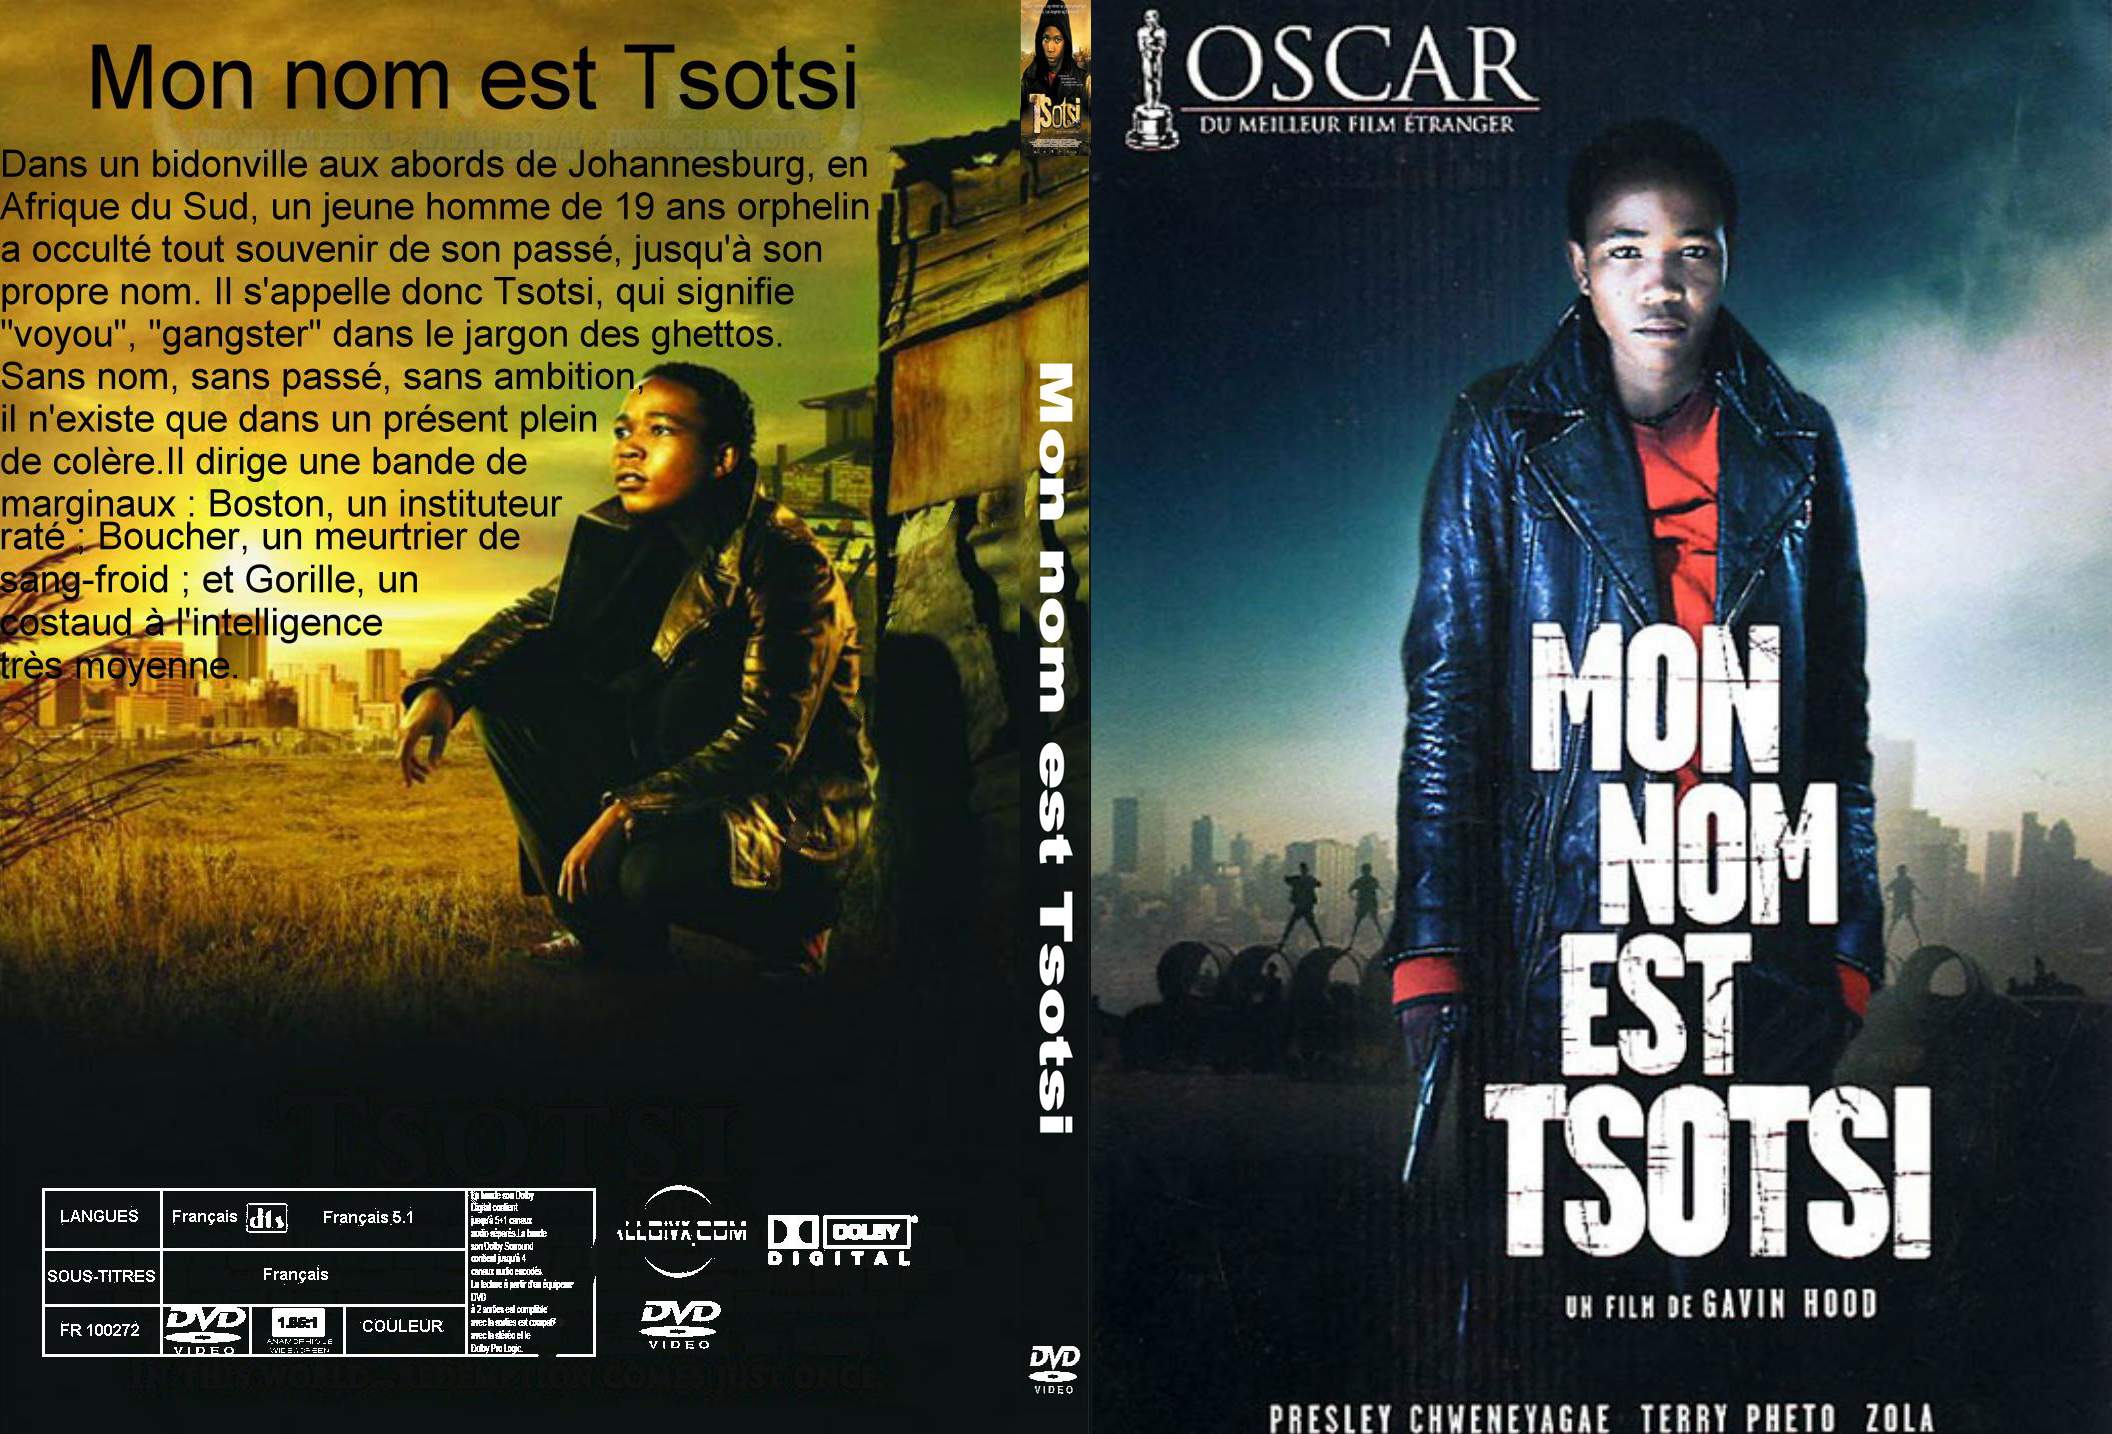 Jaquette DVD Mon nom est tsotsi - SLIM